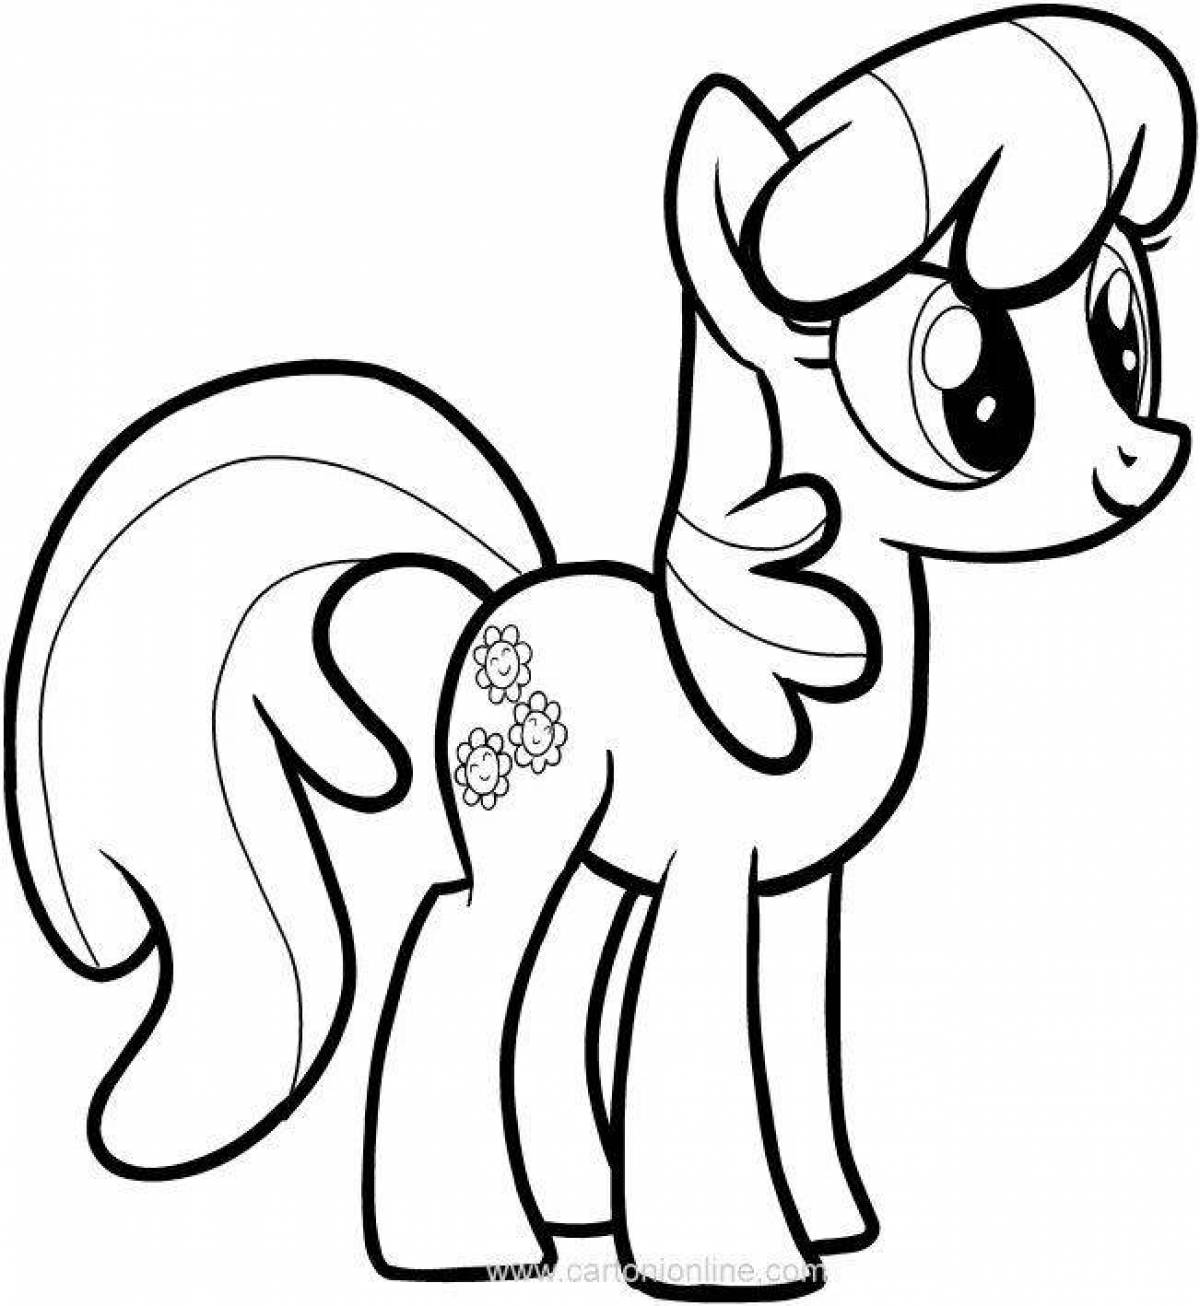 My little Pony Даймонд тиара раскраска